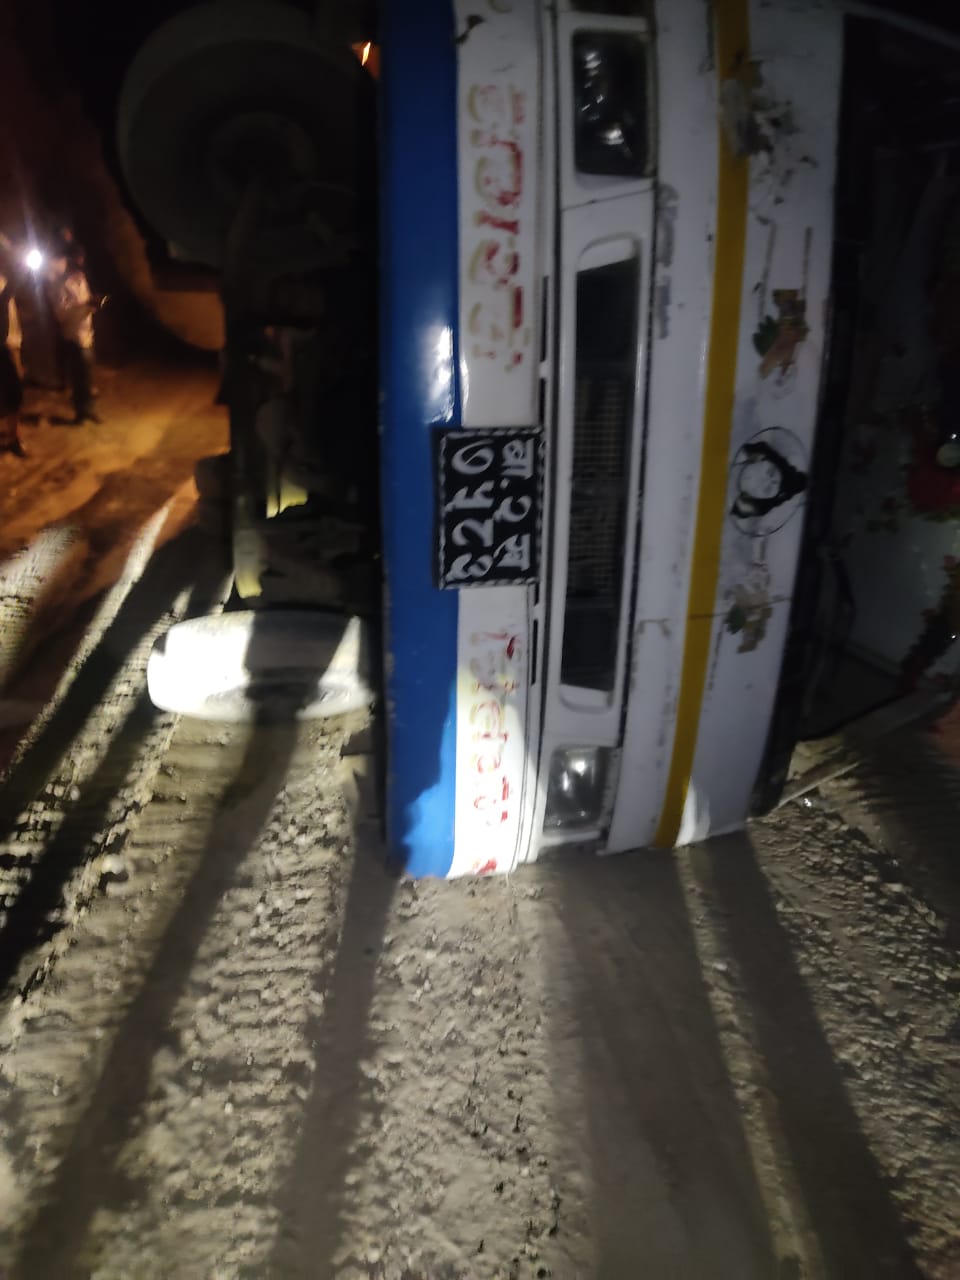 कालीगण्डकी करिडोरको गैंडाकोट बुलिङ्गटार  सडक खण्डमा बस दुर्घटना : ९ जना घाईते